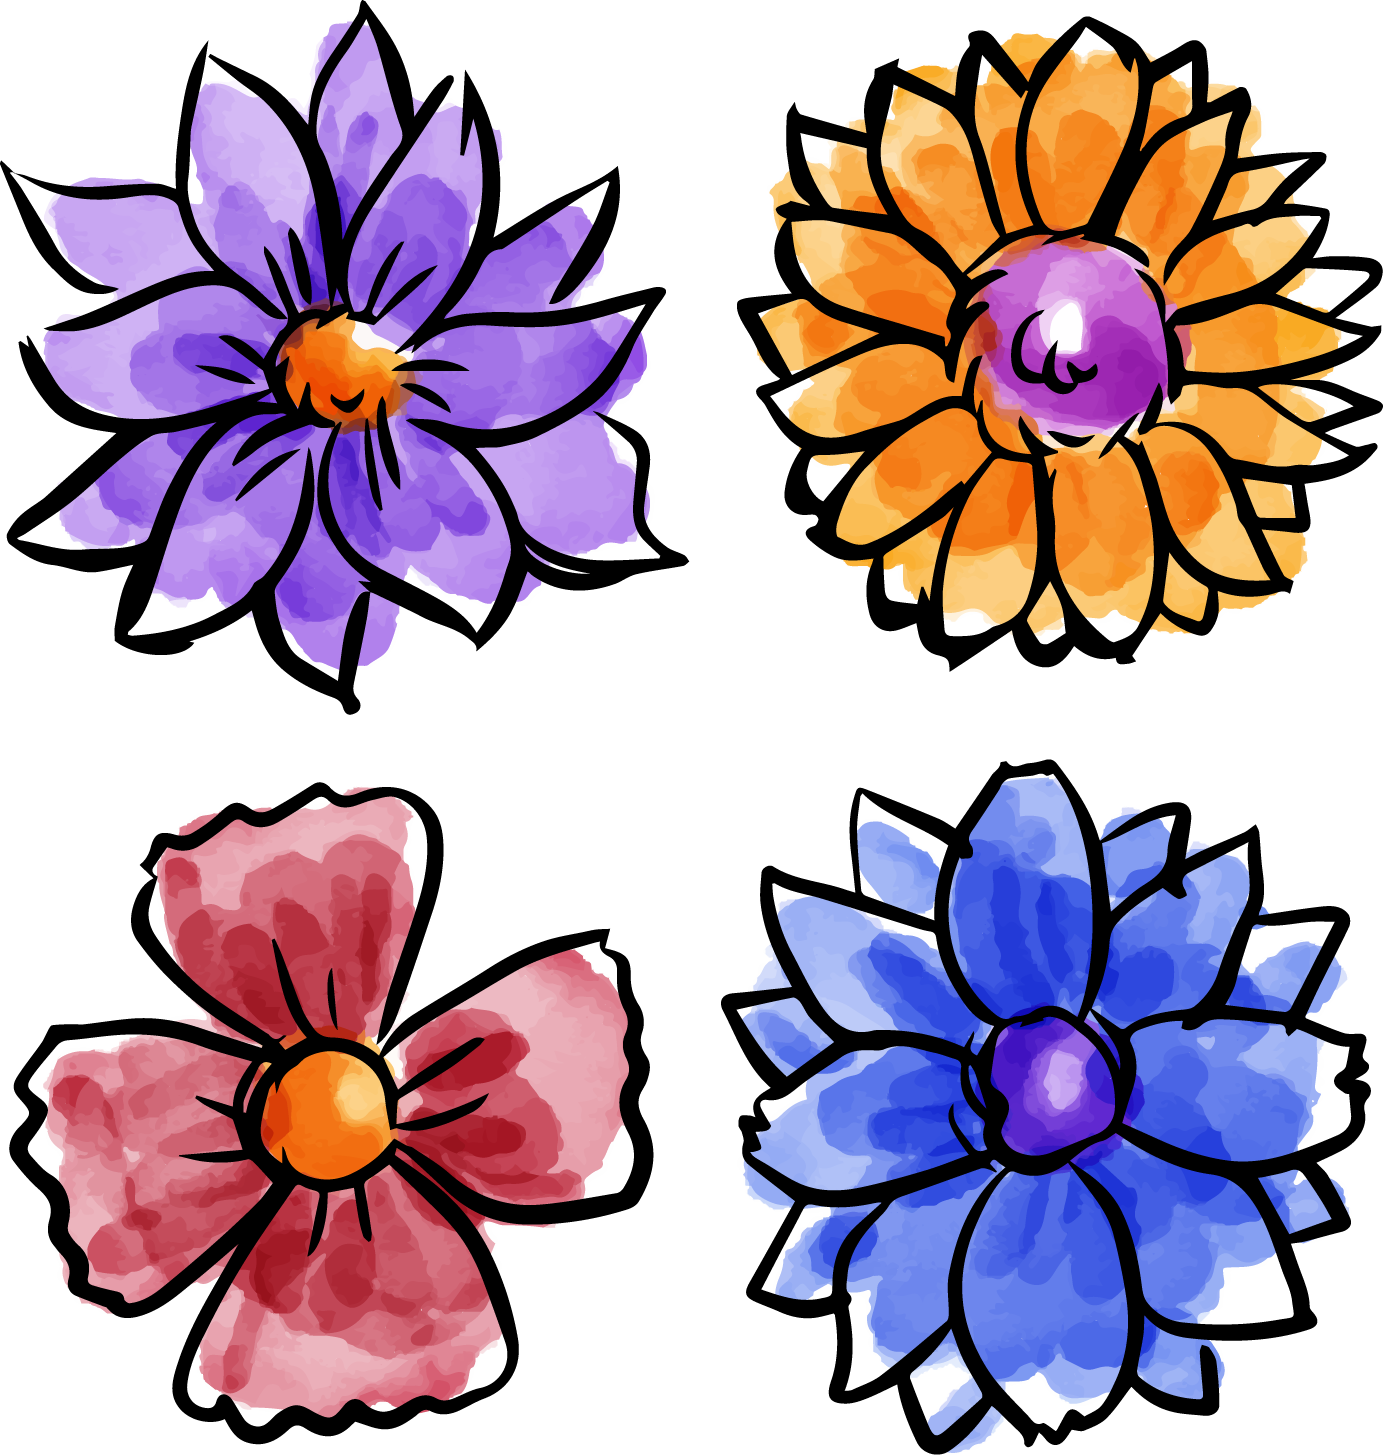 Floral Design Watercolor - Floral Design Watercolor (1383x1455)